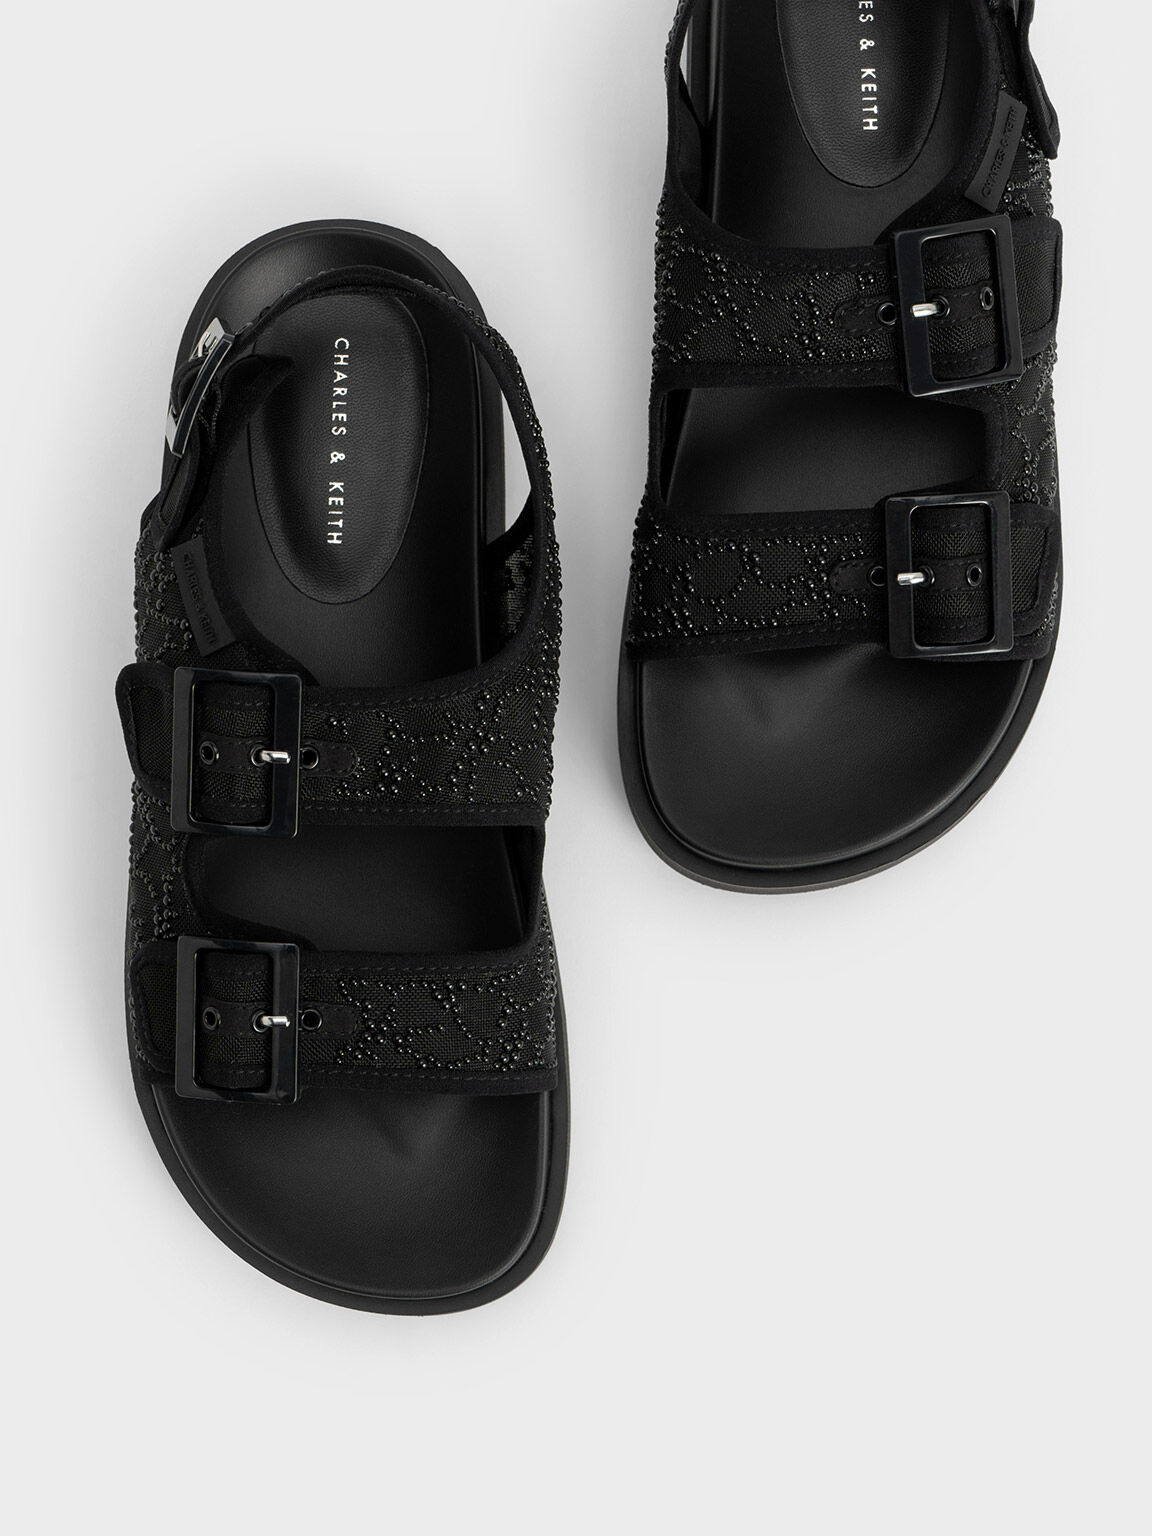 Sandal Flatform Beaded Mesh, Black, hi-res